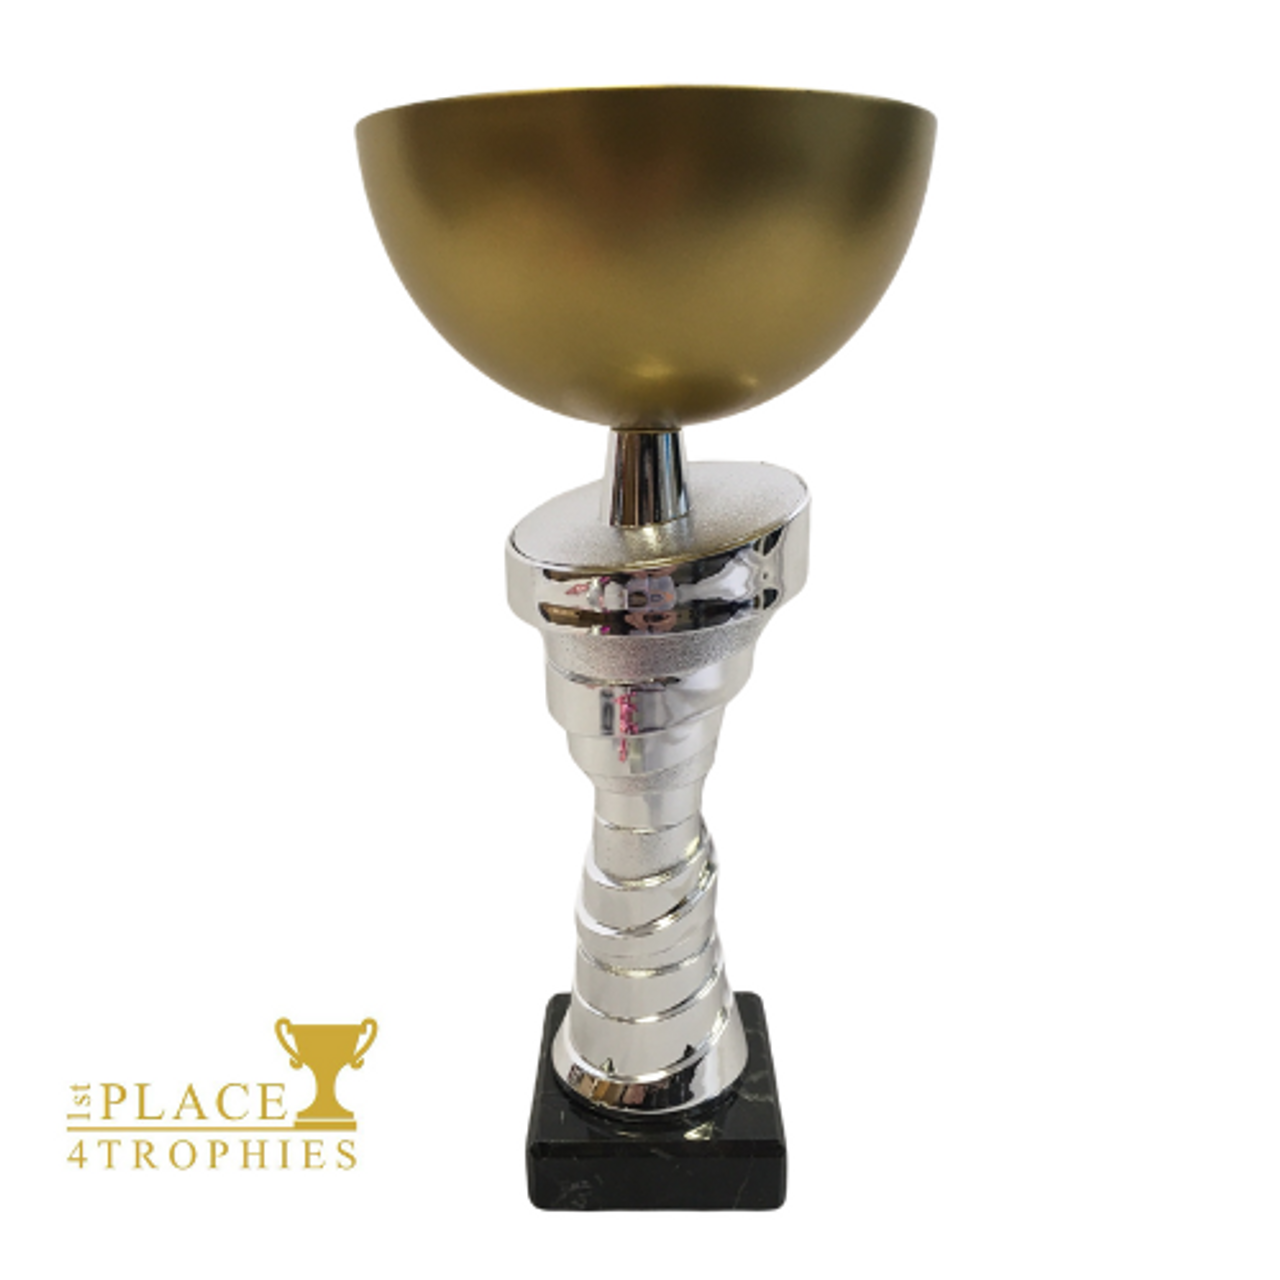 Multisports Gold & Silver Award 9.75"